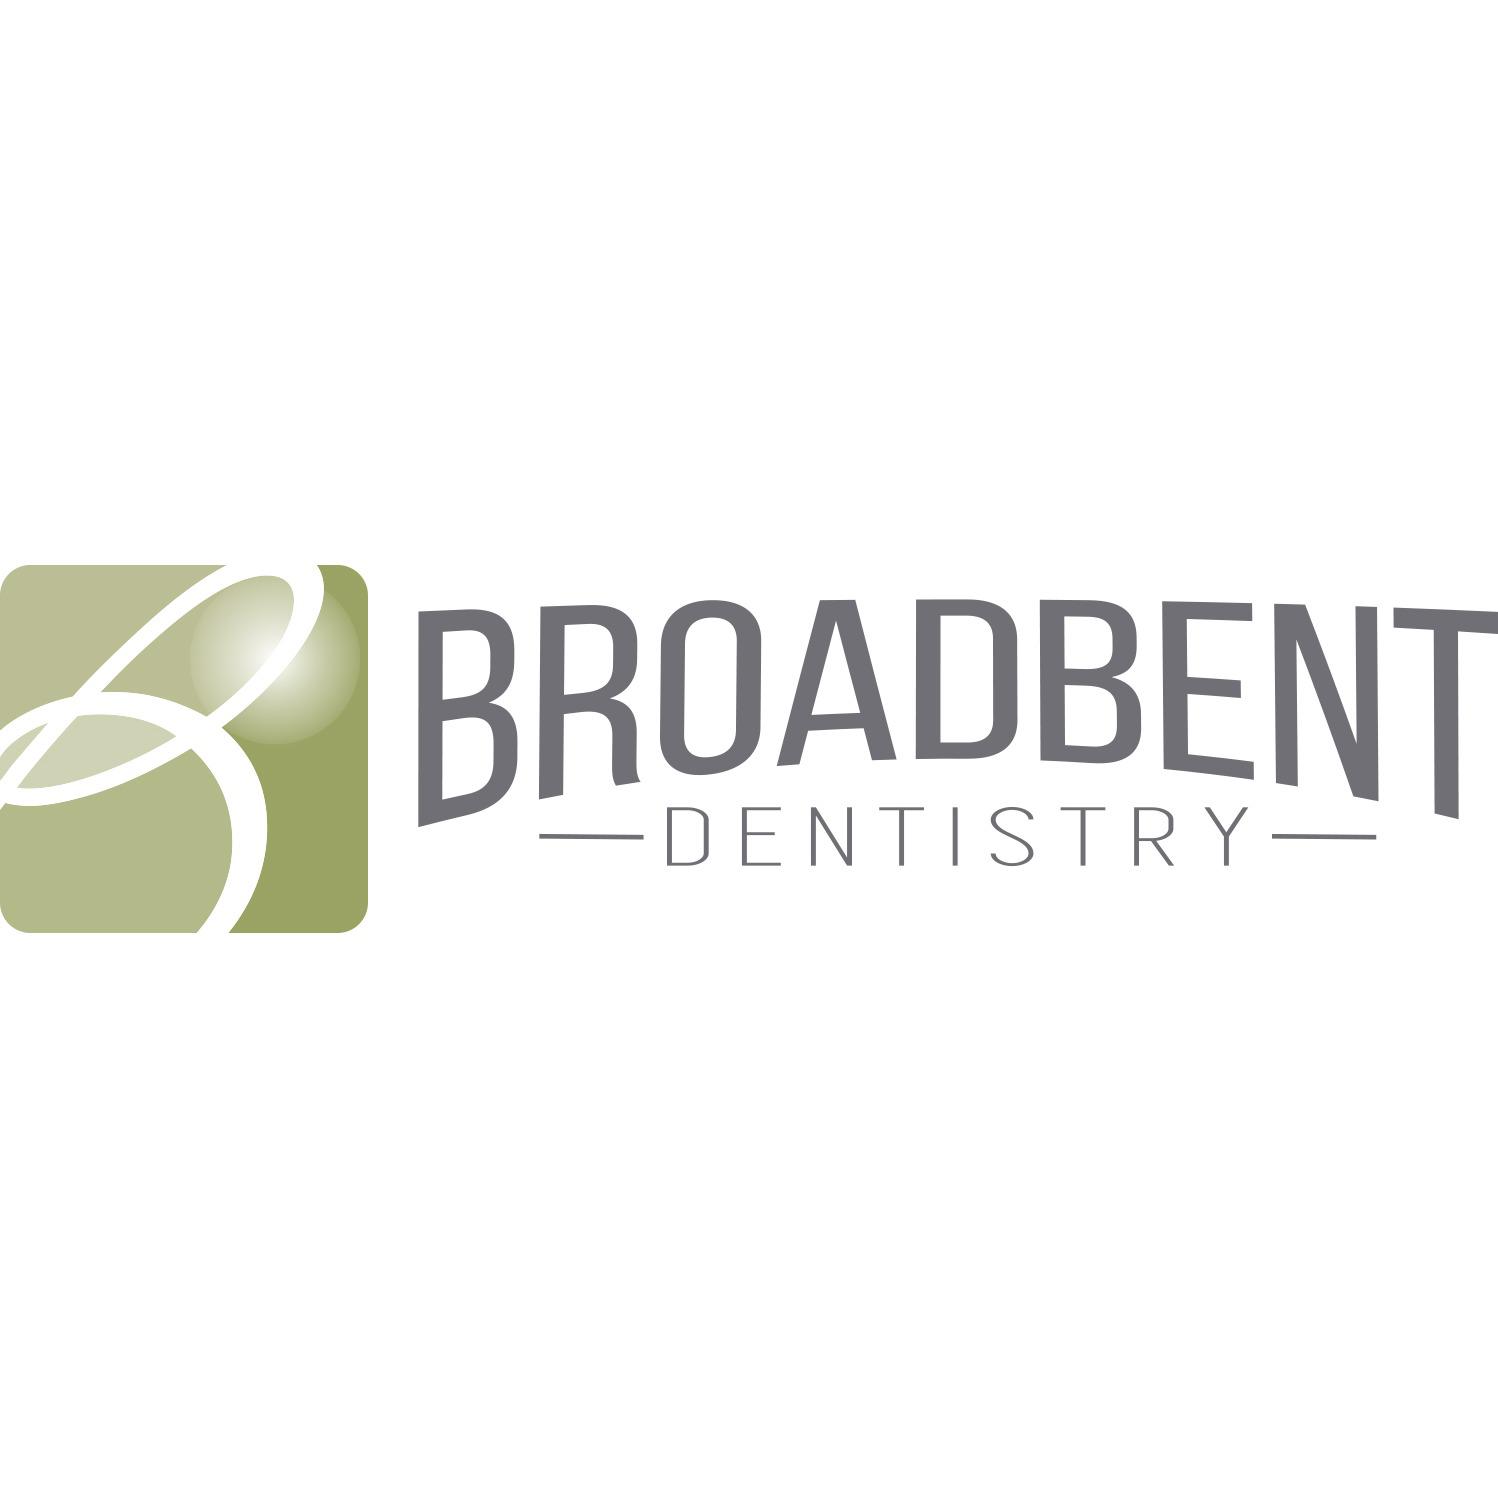 Broadbent Dentistry - Mesa, AZ 85205 - (480)924-8633 | ShowMeLocal.com